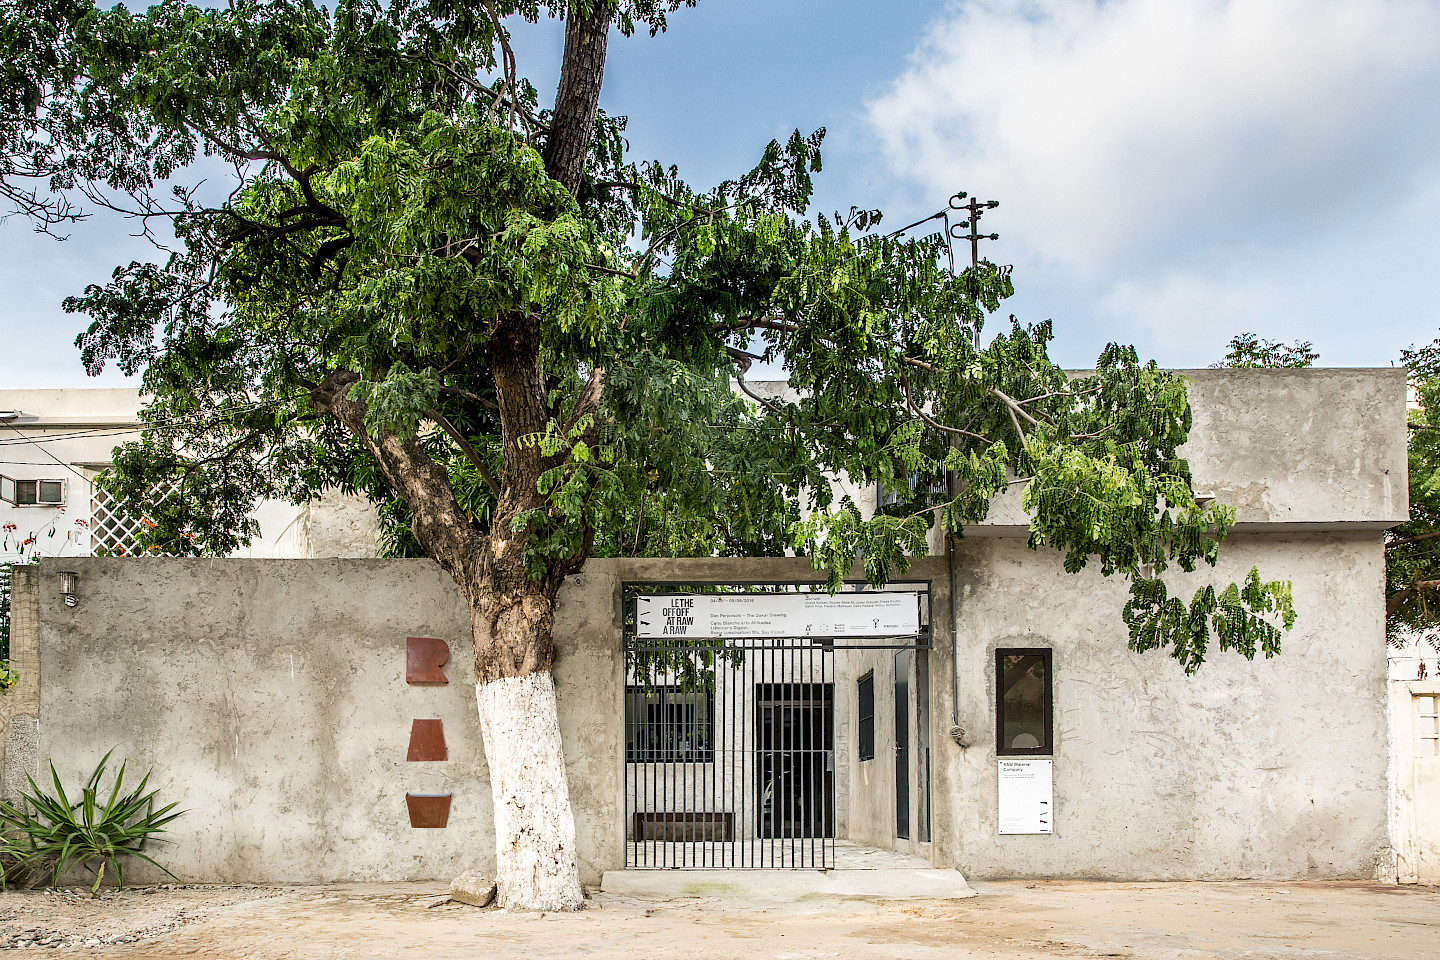 Museen in Afrika – unabhängige Kunst-Institutionen in Dakar
